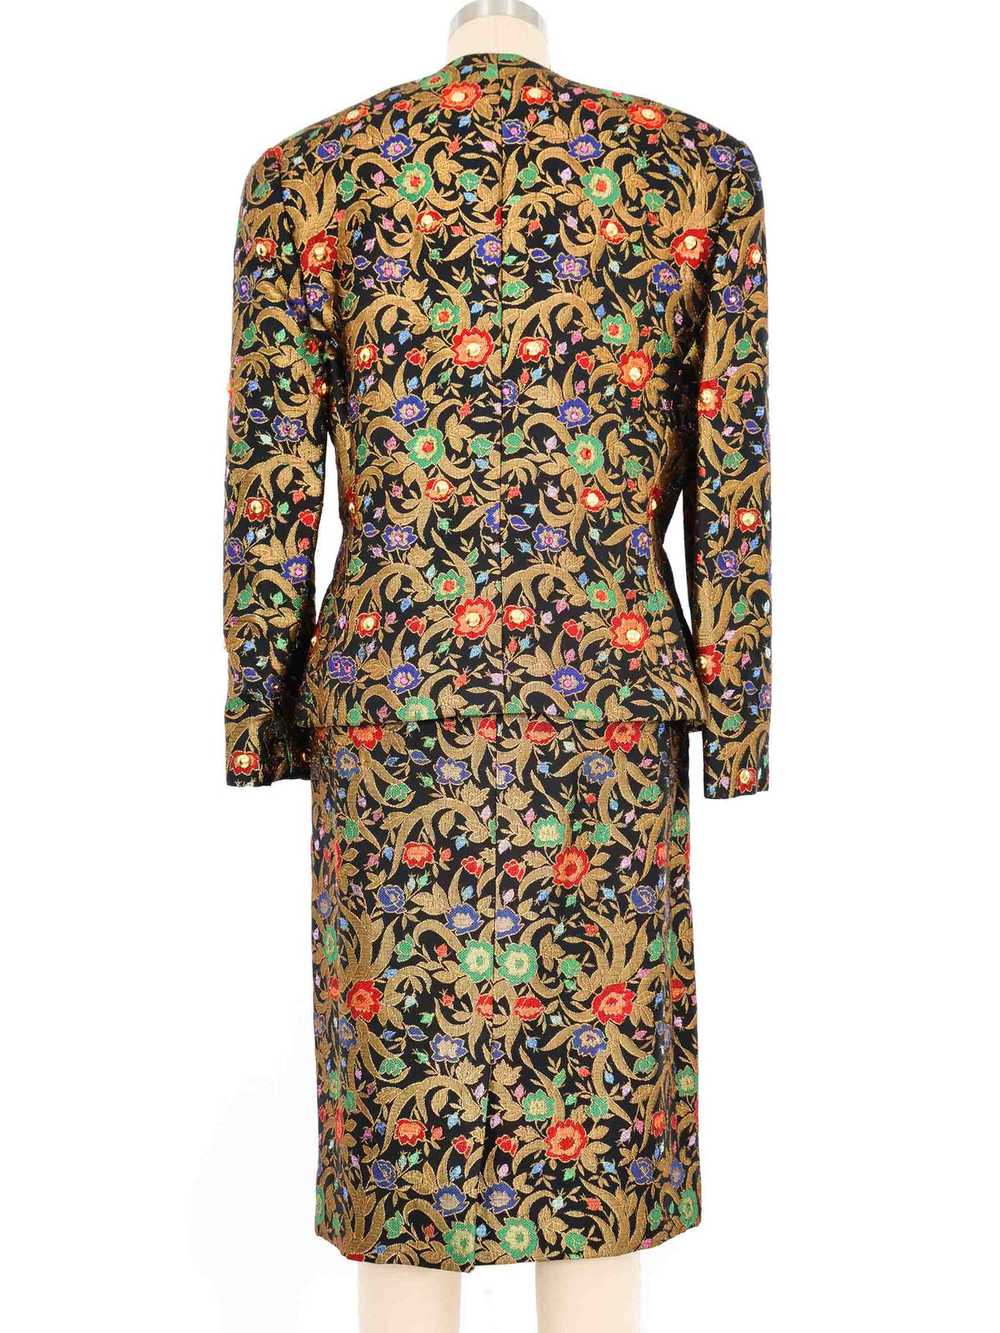 Adele Simpson Jewel Toned Brocade Suit - image 5